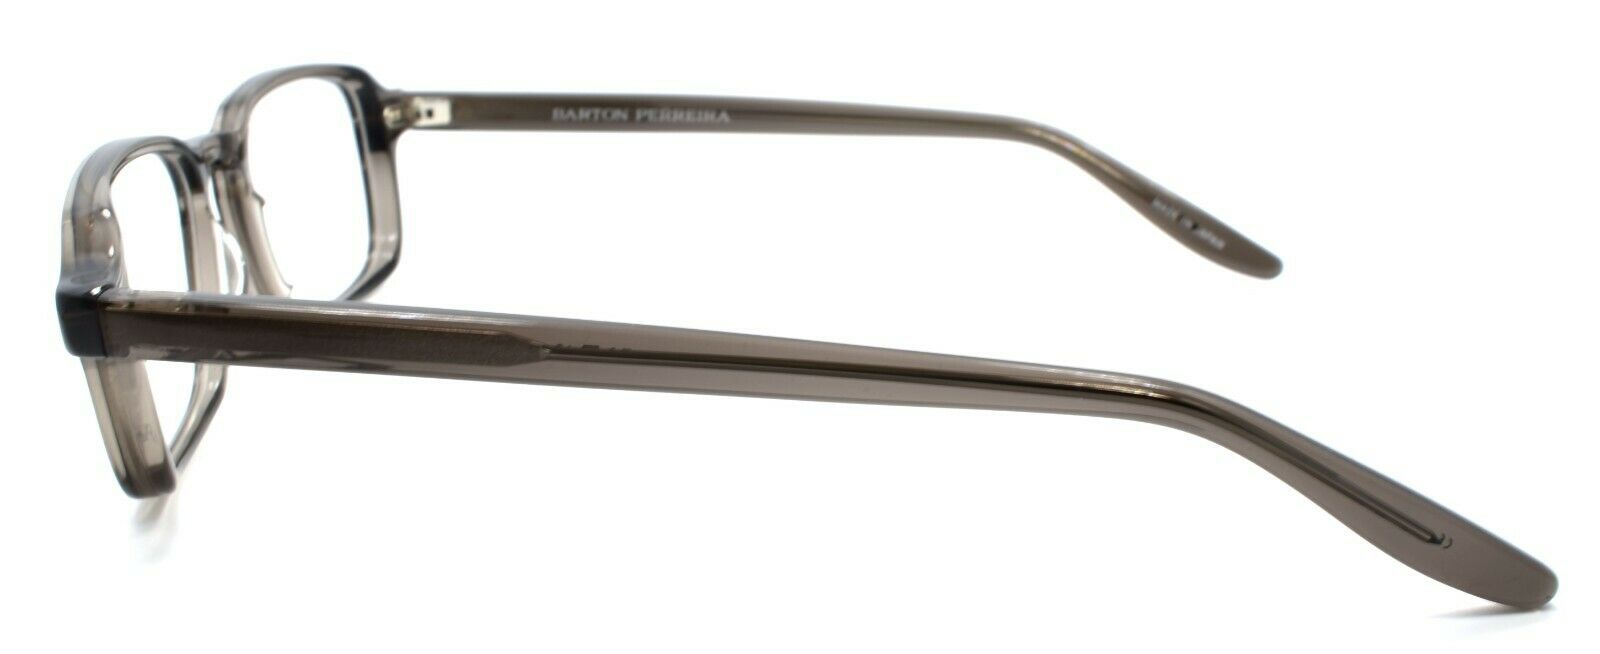 3-Barton Perreira Jeston DUS Unisex Eyeglasses Frames 50-19-145 Dusk Gray-IKSpecs